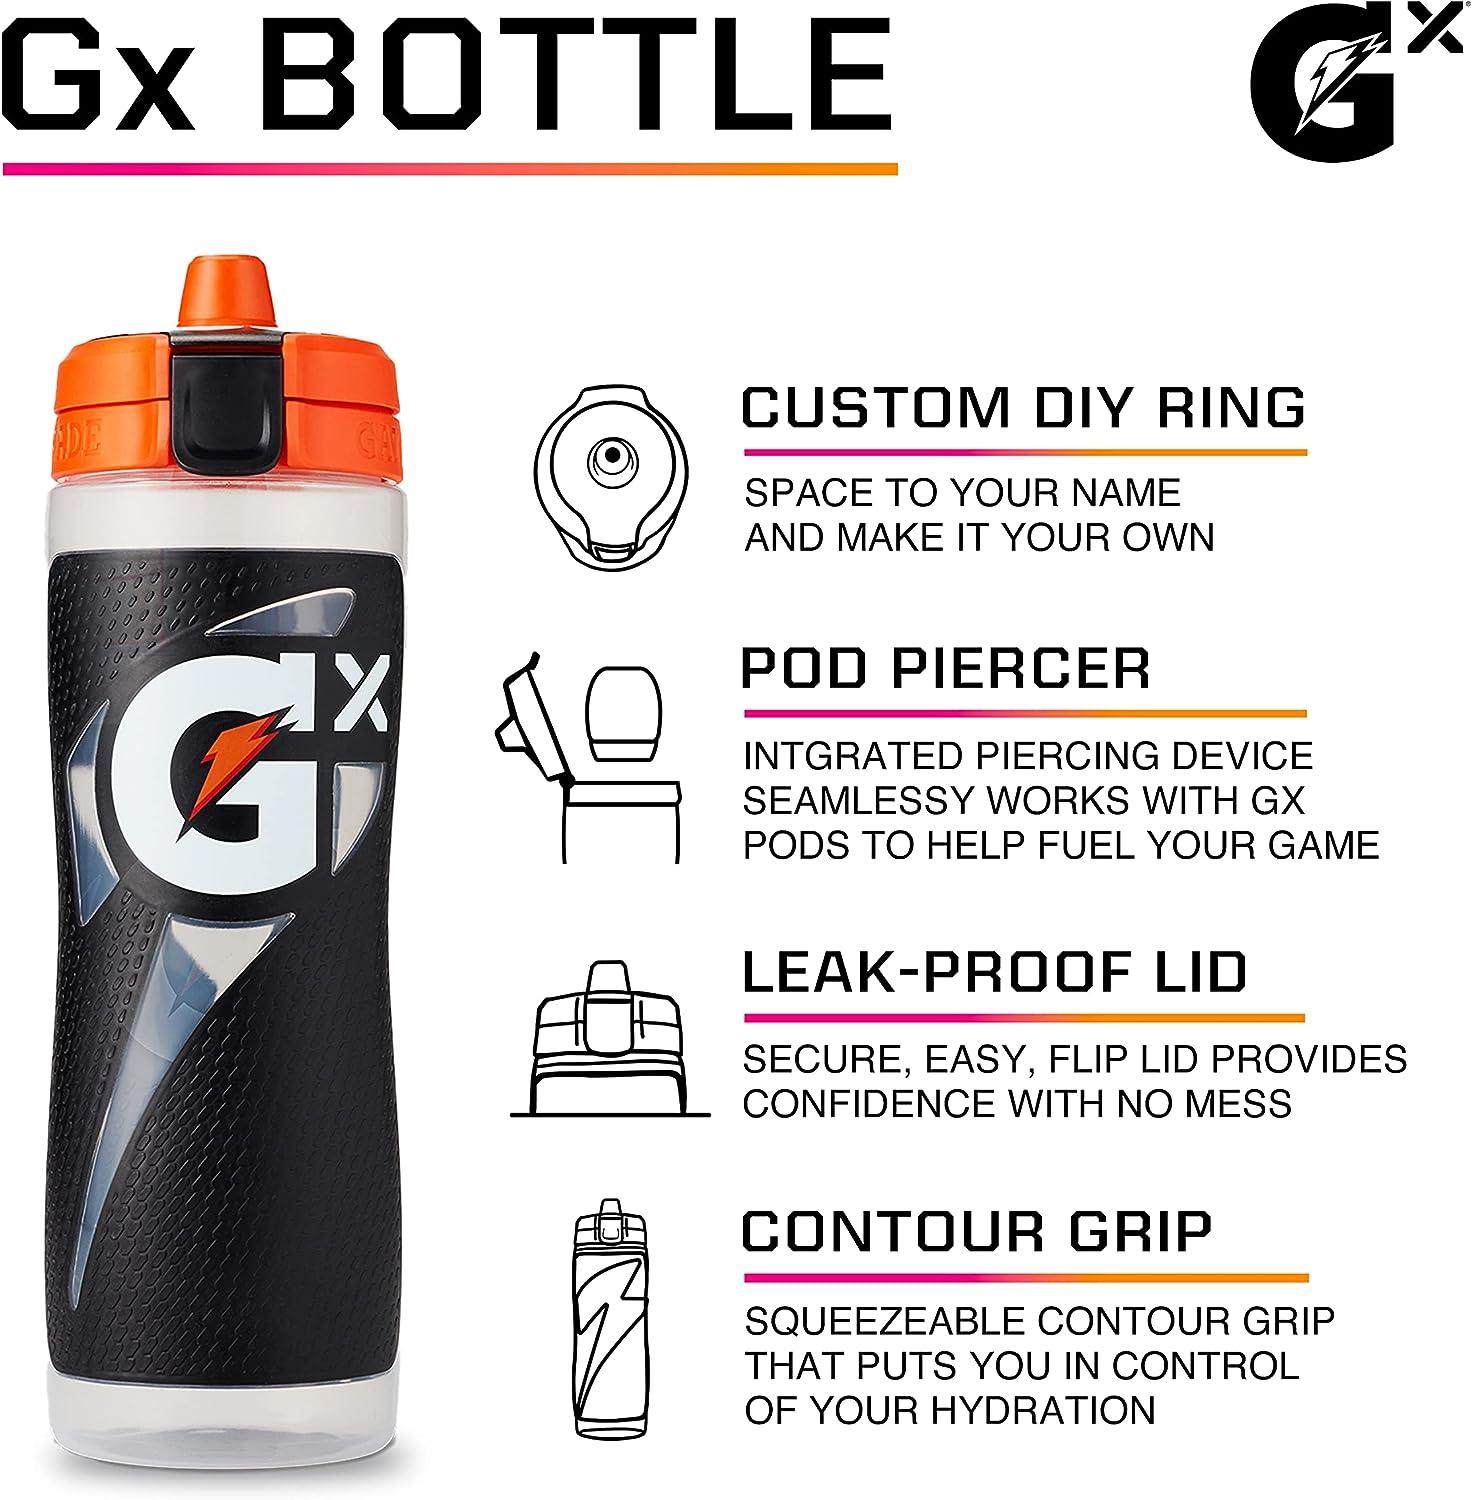 Gatorade Gx Hydration System, Non-Slip Gx Squeeze Bottles Neon Yellow  Plastic, 30 Oz